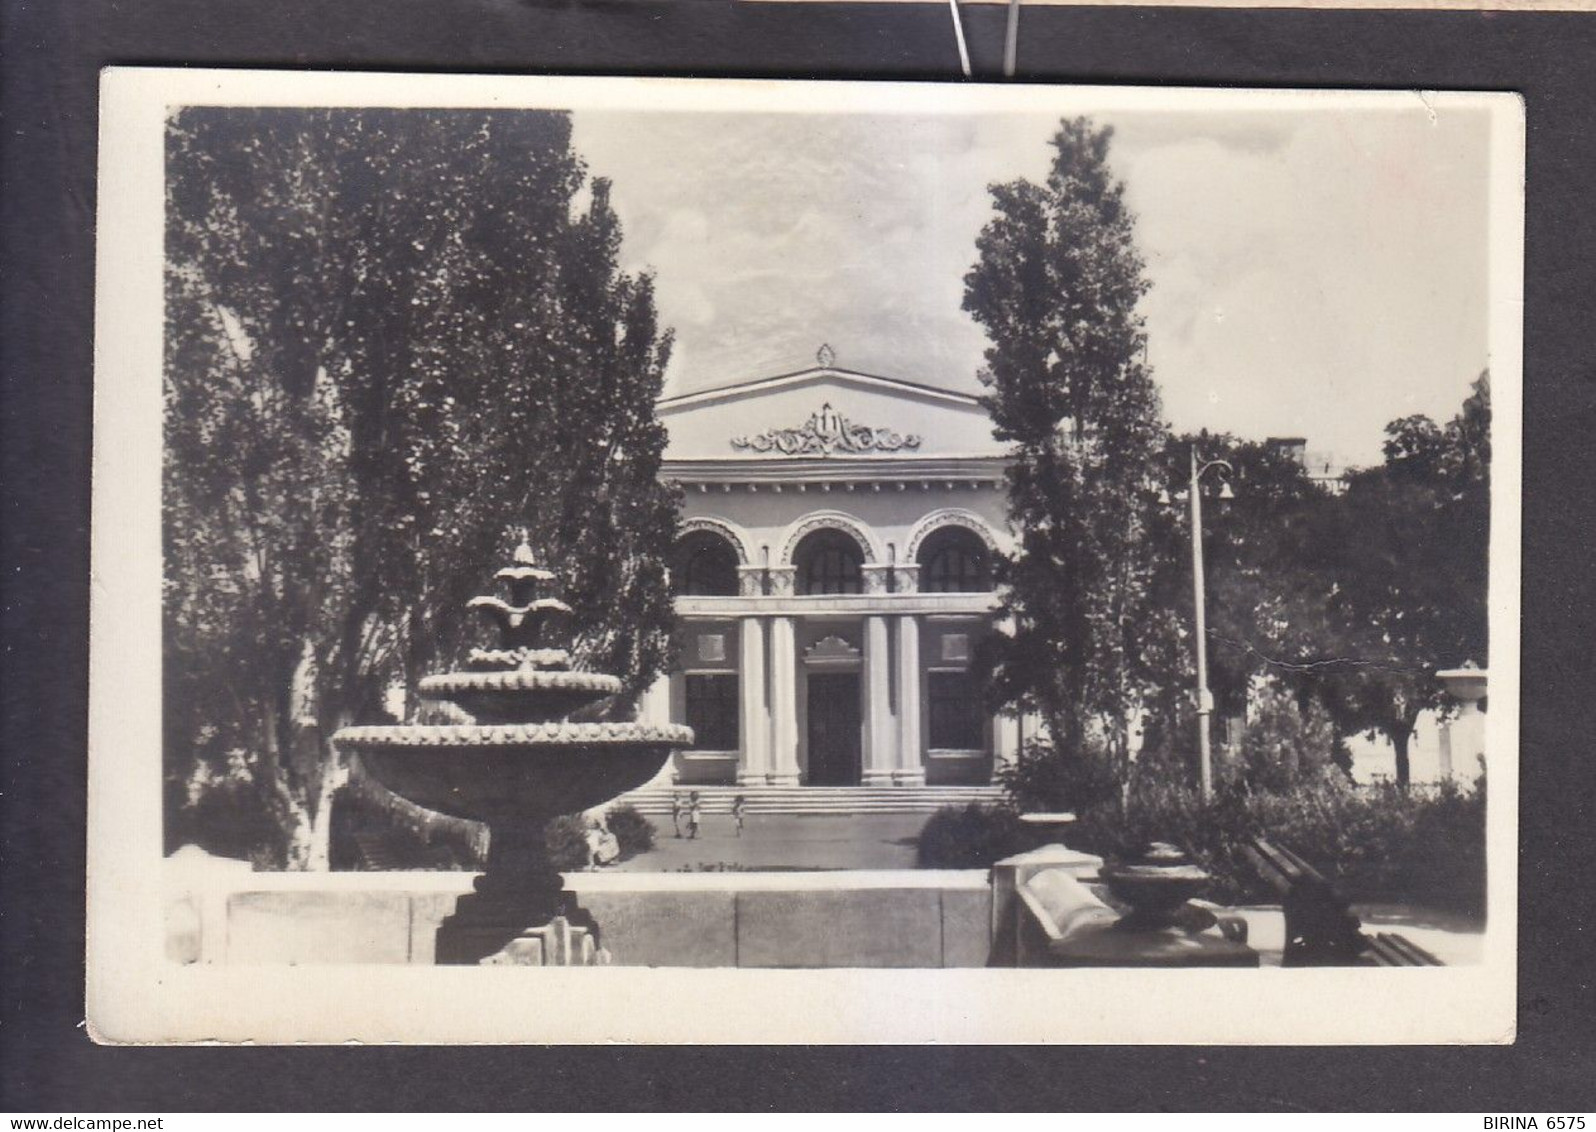 POSTCARD. MOLDOVA. TIRASPOL. HOUSE OF CULTURE. 1961. - 9-33-i - Moldavie